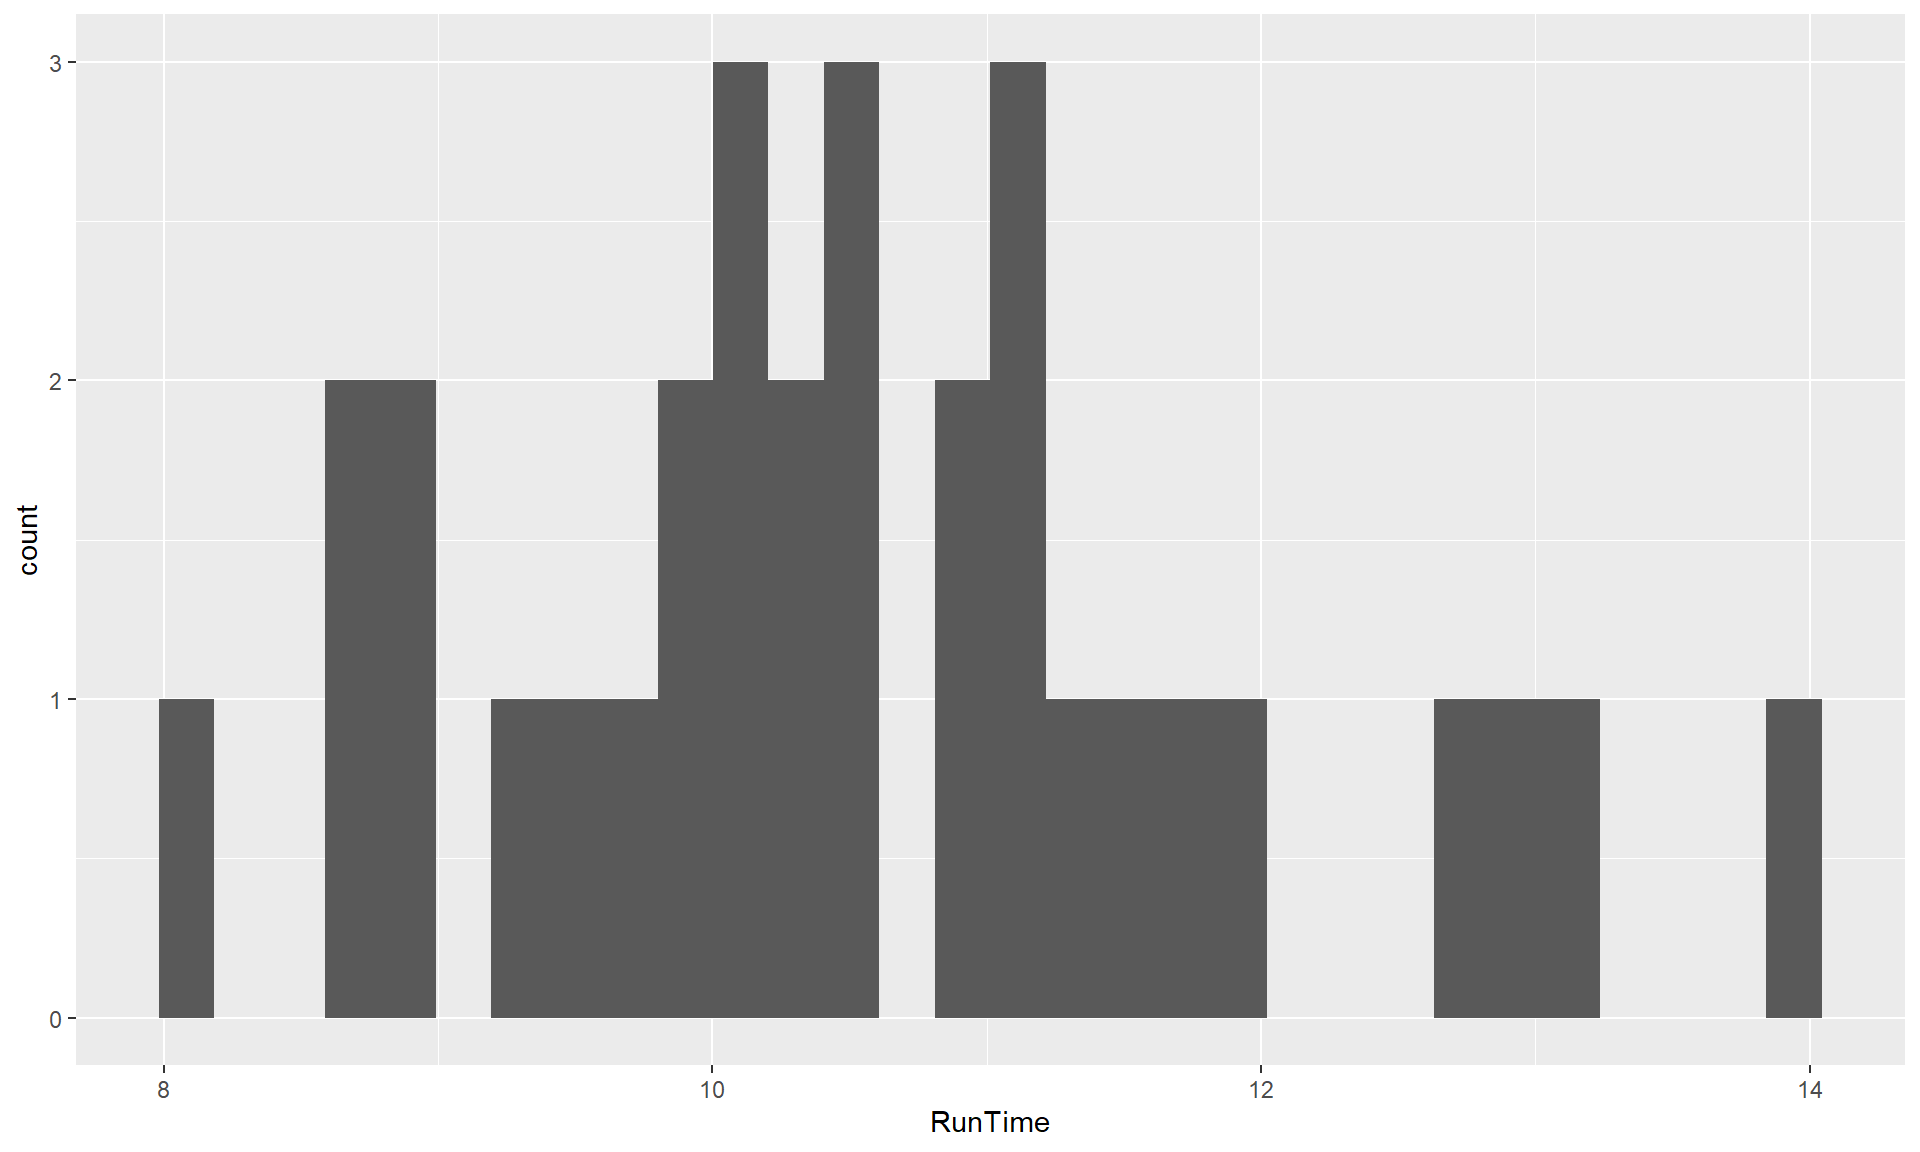 Default histogram of Run Times using ggplot.